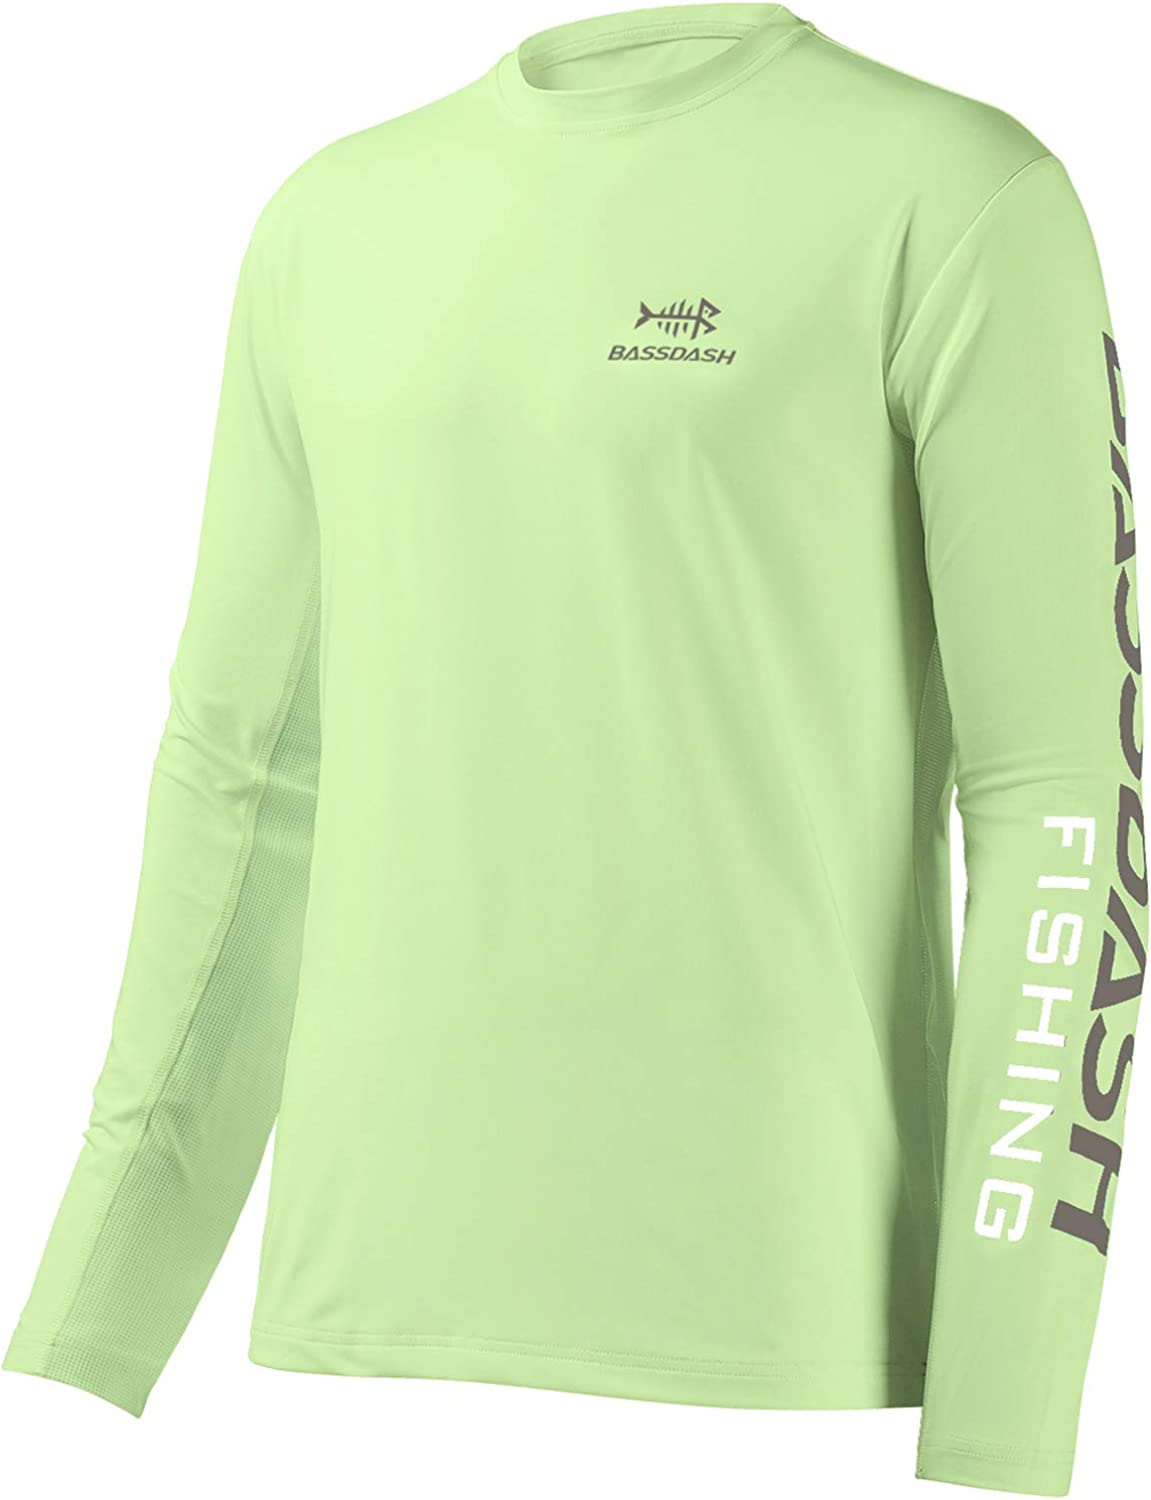 BASSDASH Fishing T Shirts for Men UV Sun Protection UPF 50+ Long Sleeve Tee  T-Sh